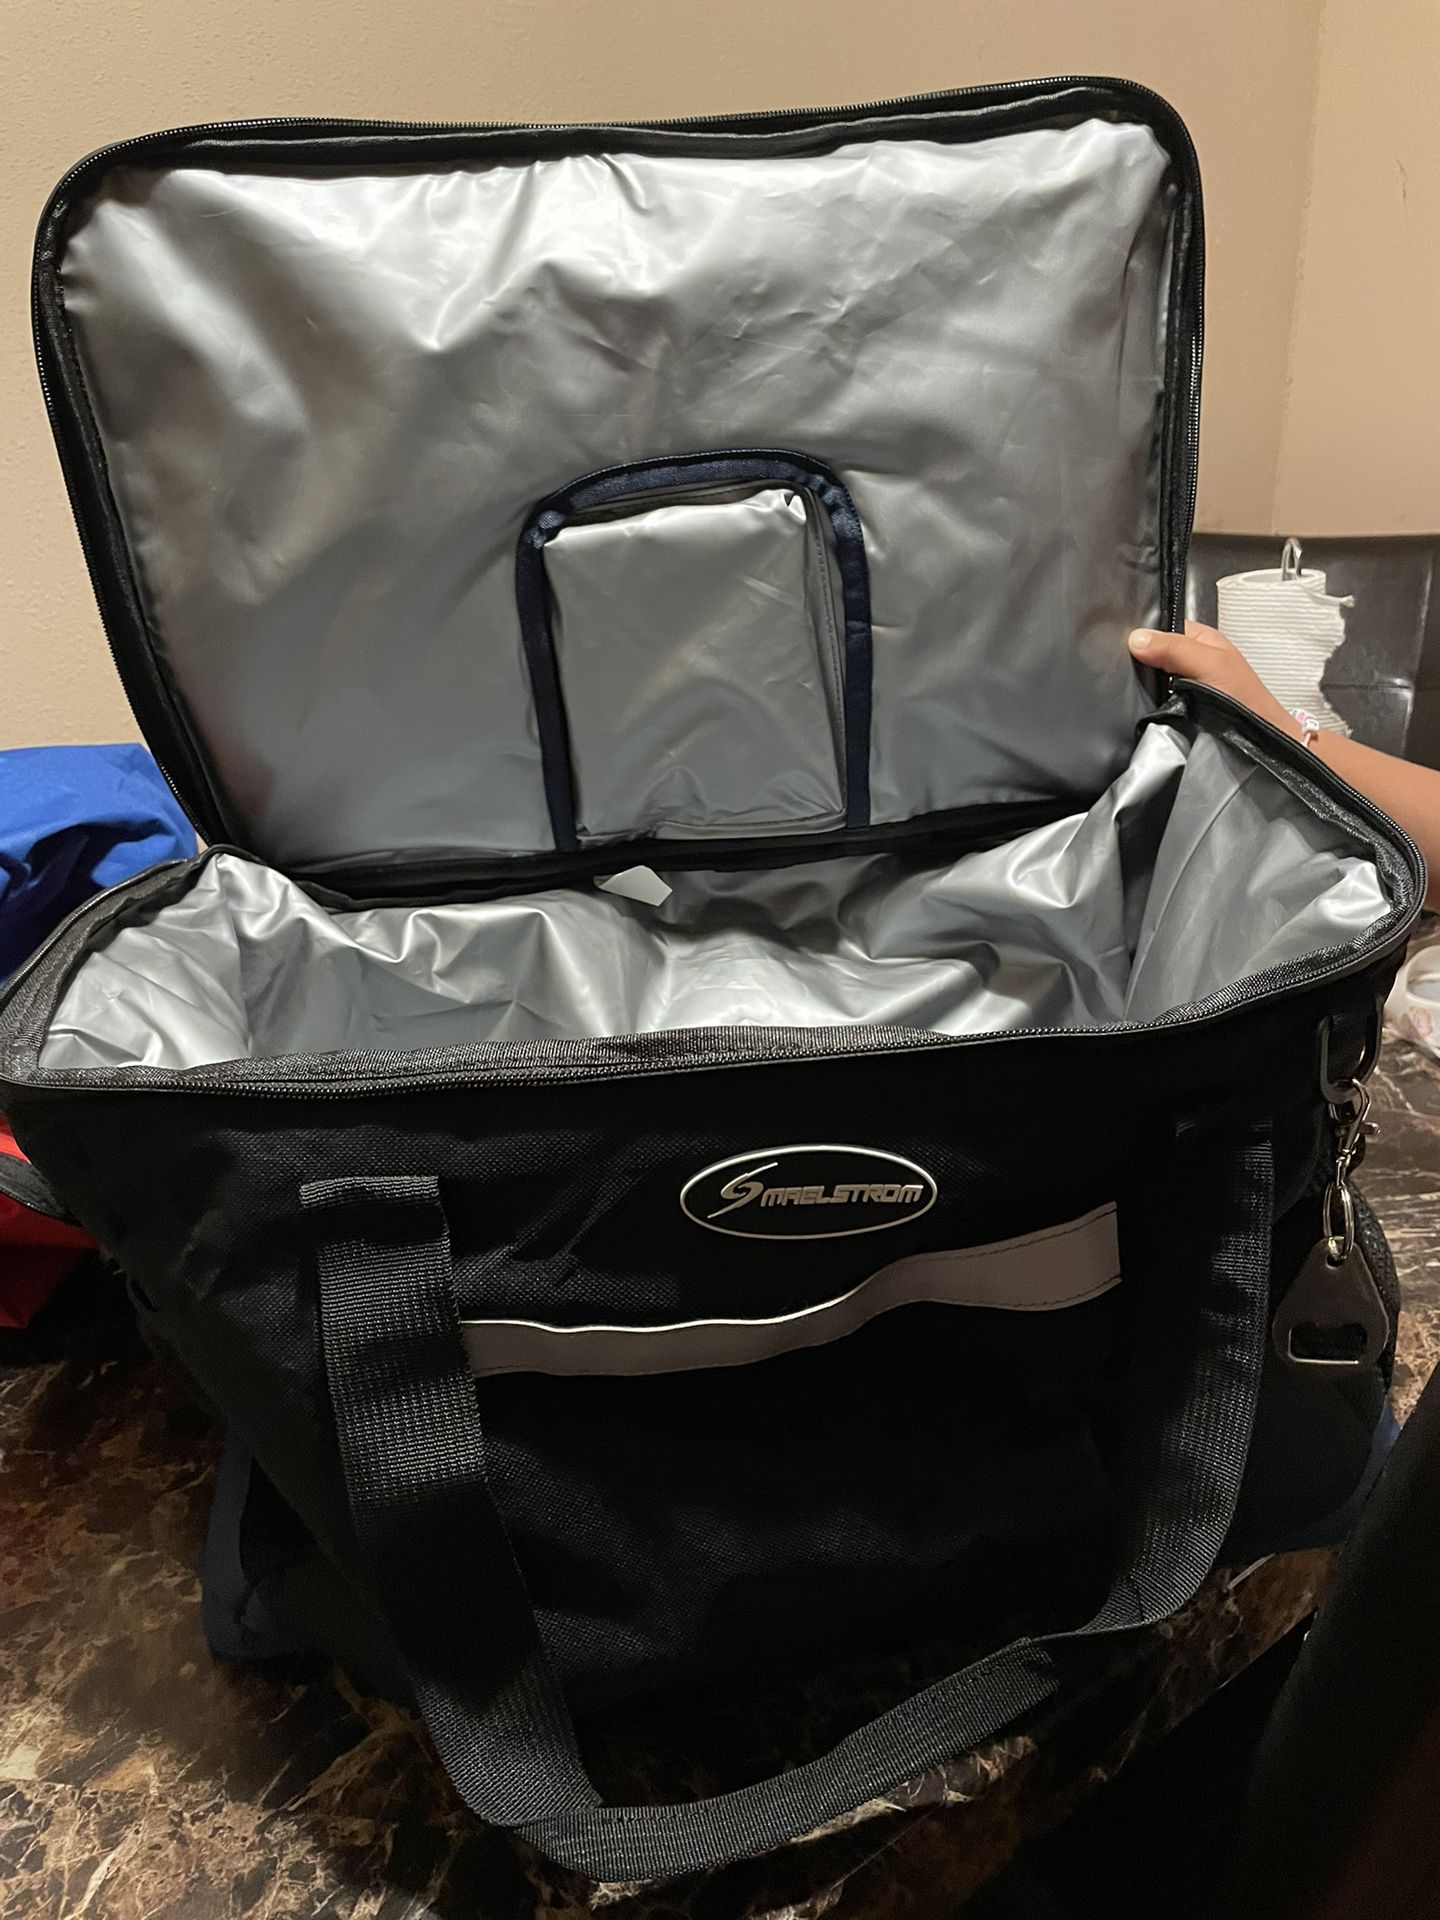 New Sleeping Bag For 2 Ppl/cooler Bag